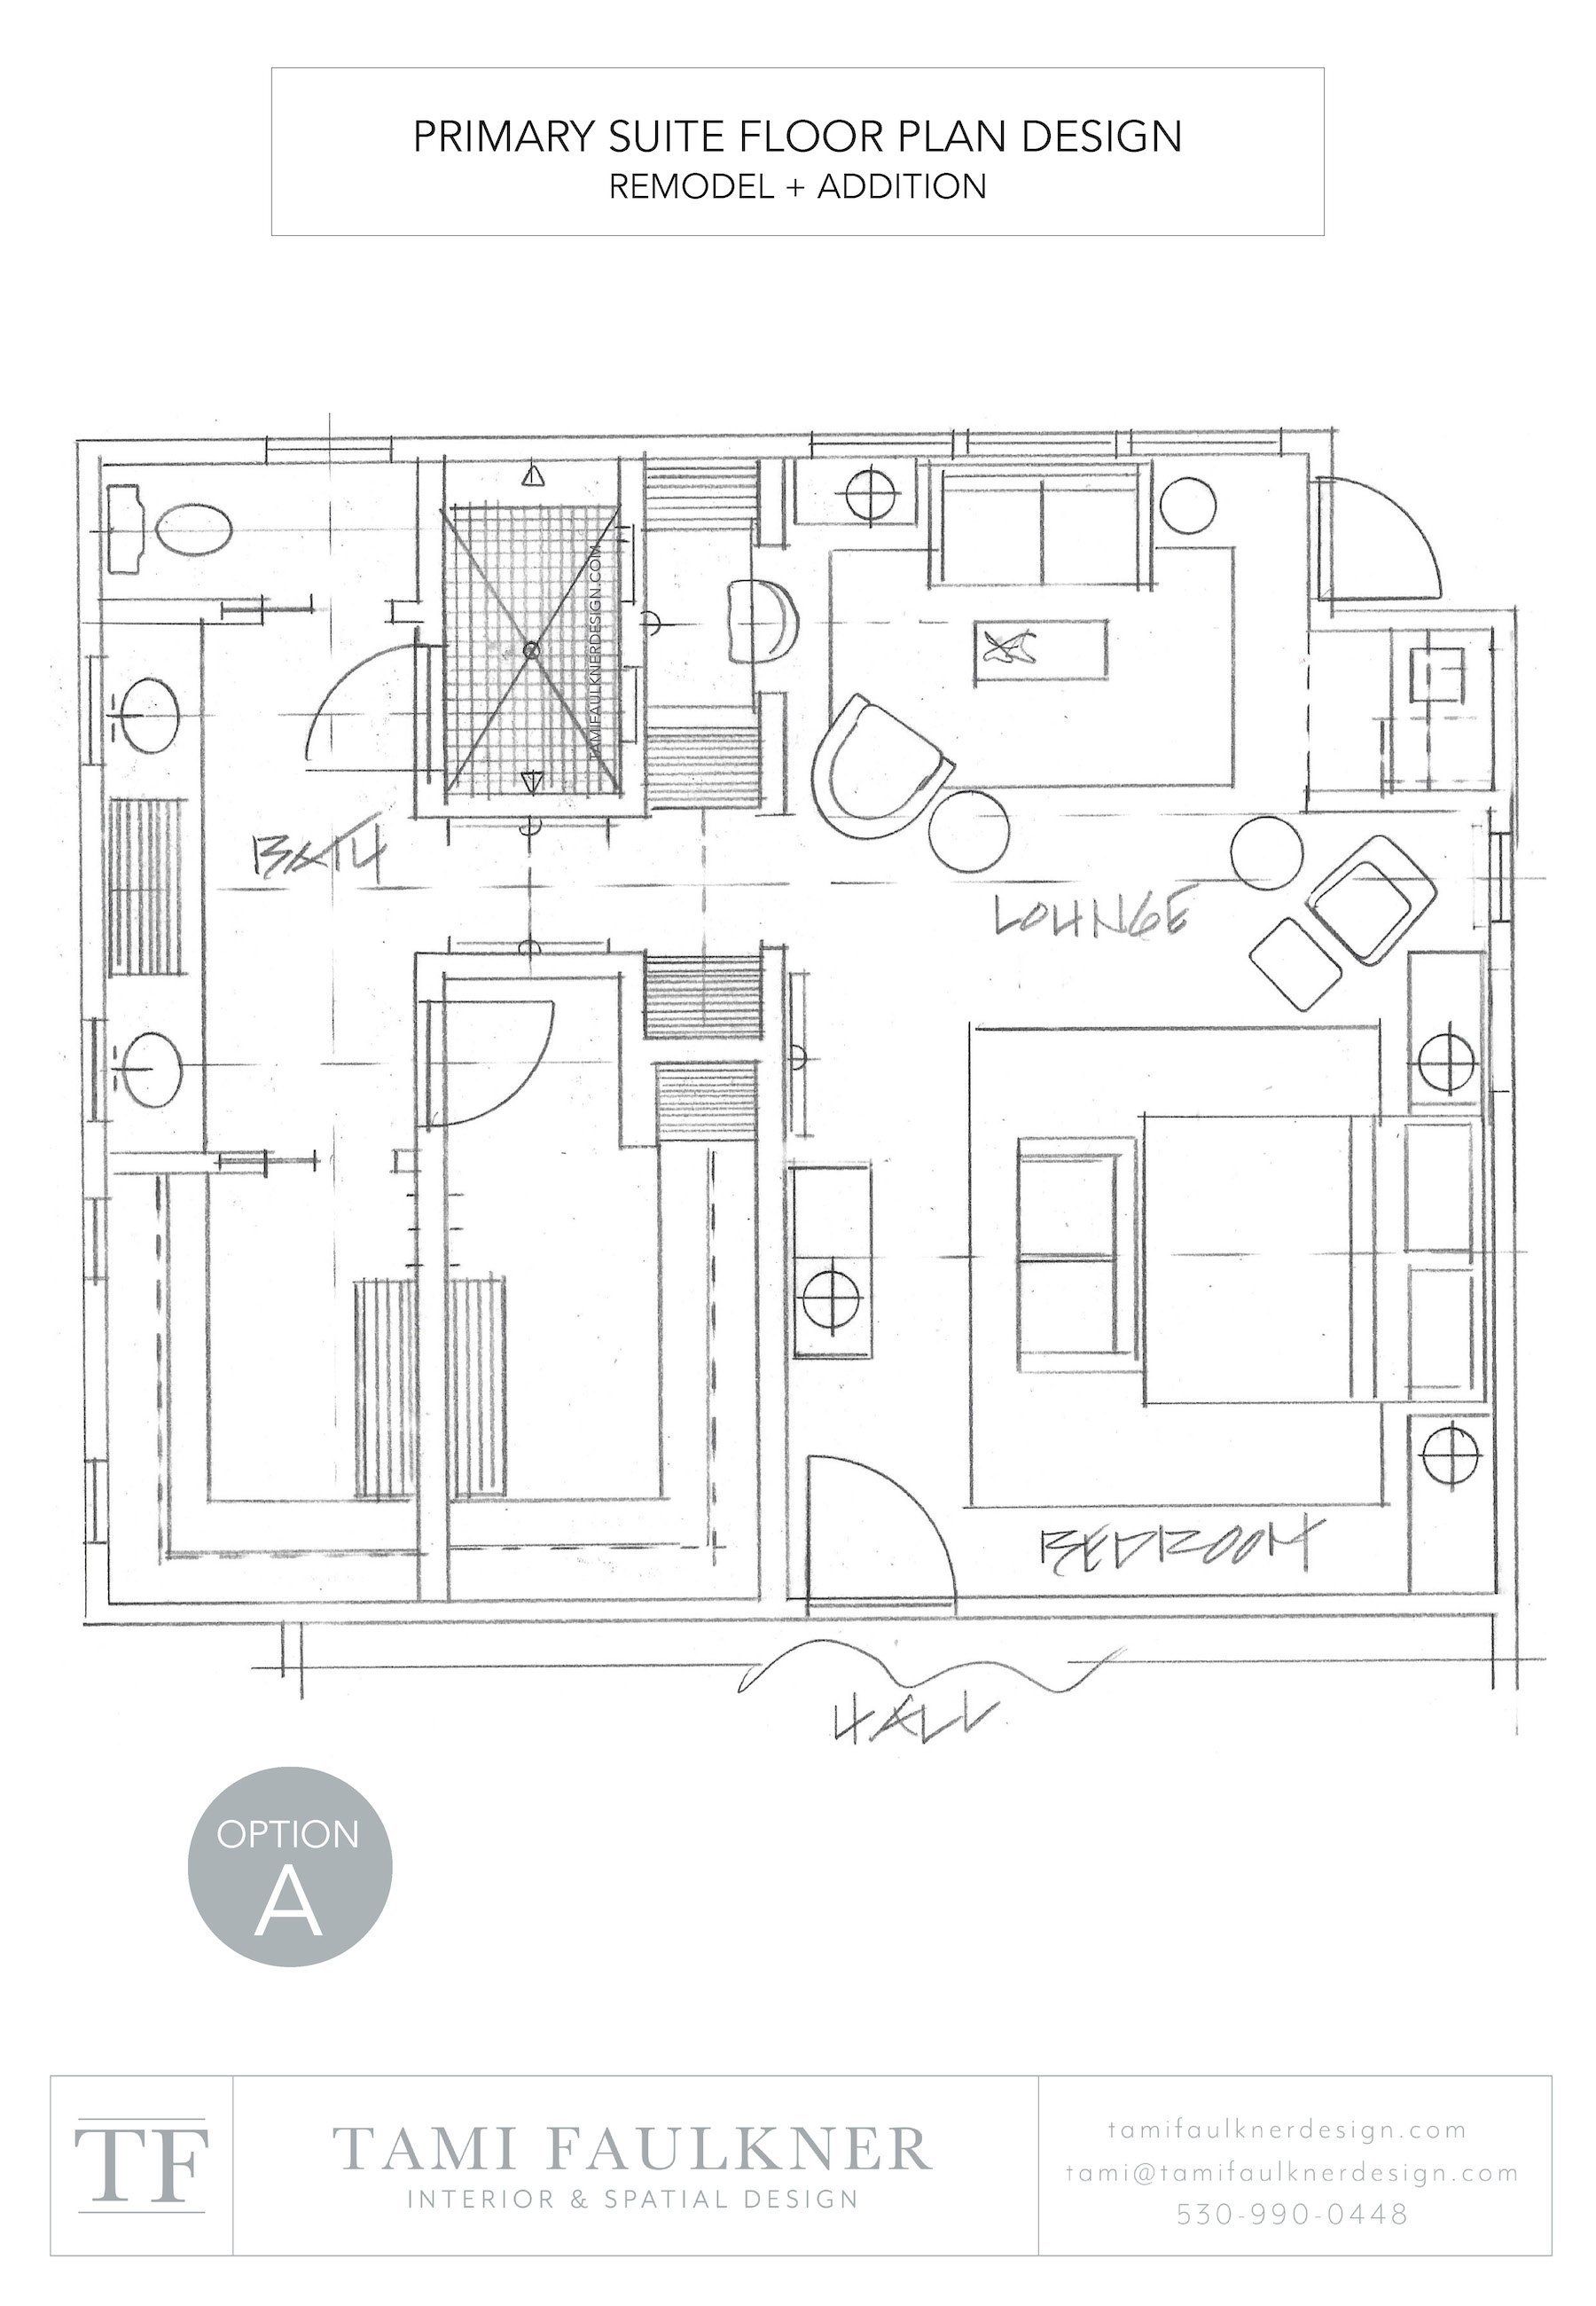 Floor Plans For Primary Suite Design